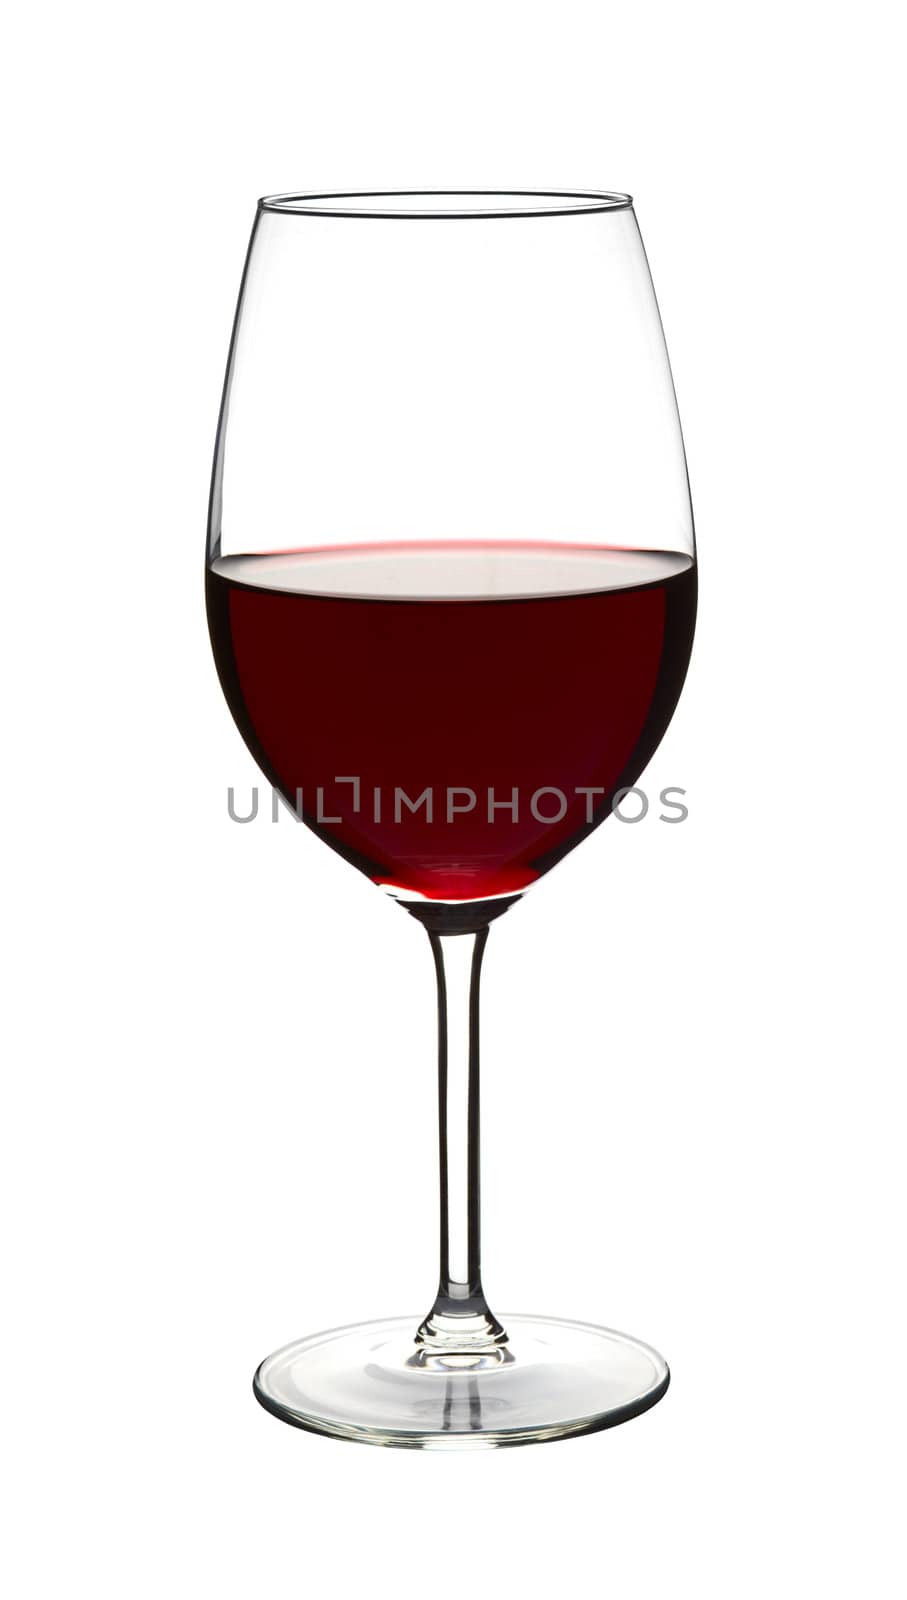 Red Wine in Wine Glass by ildi